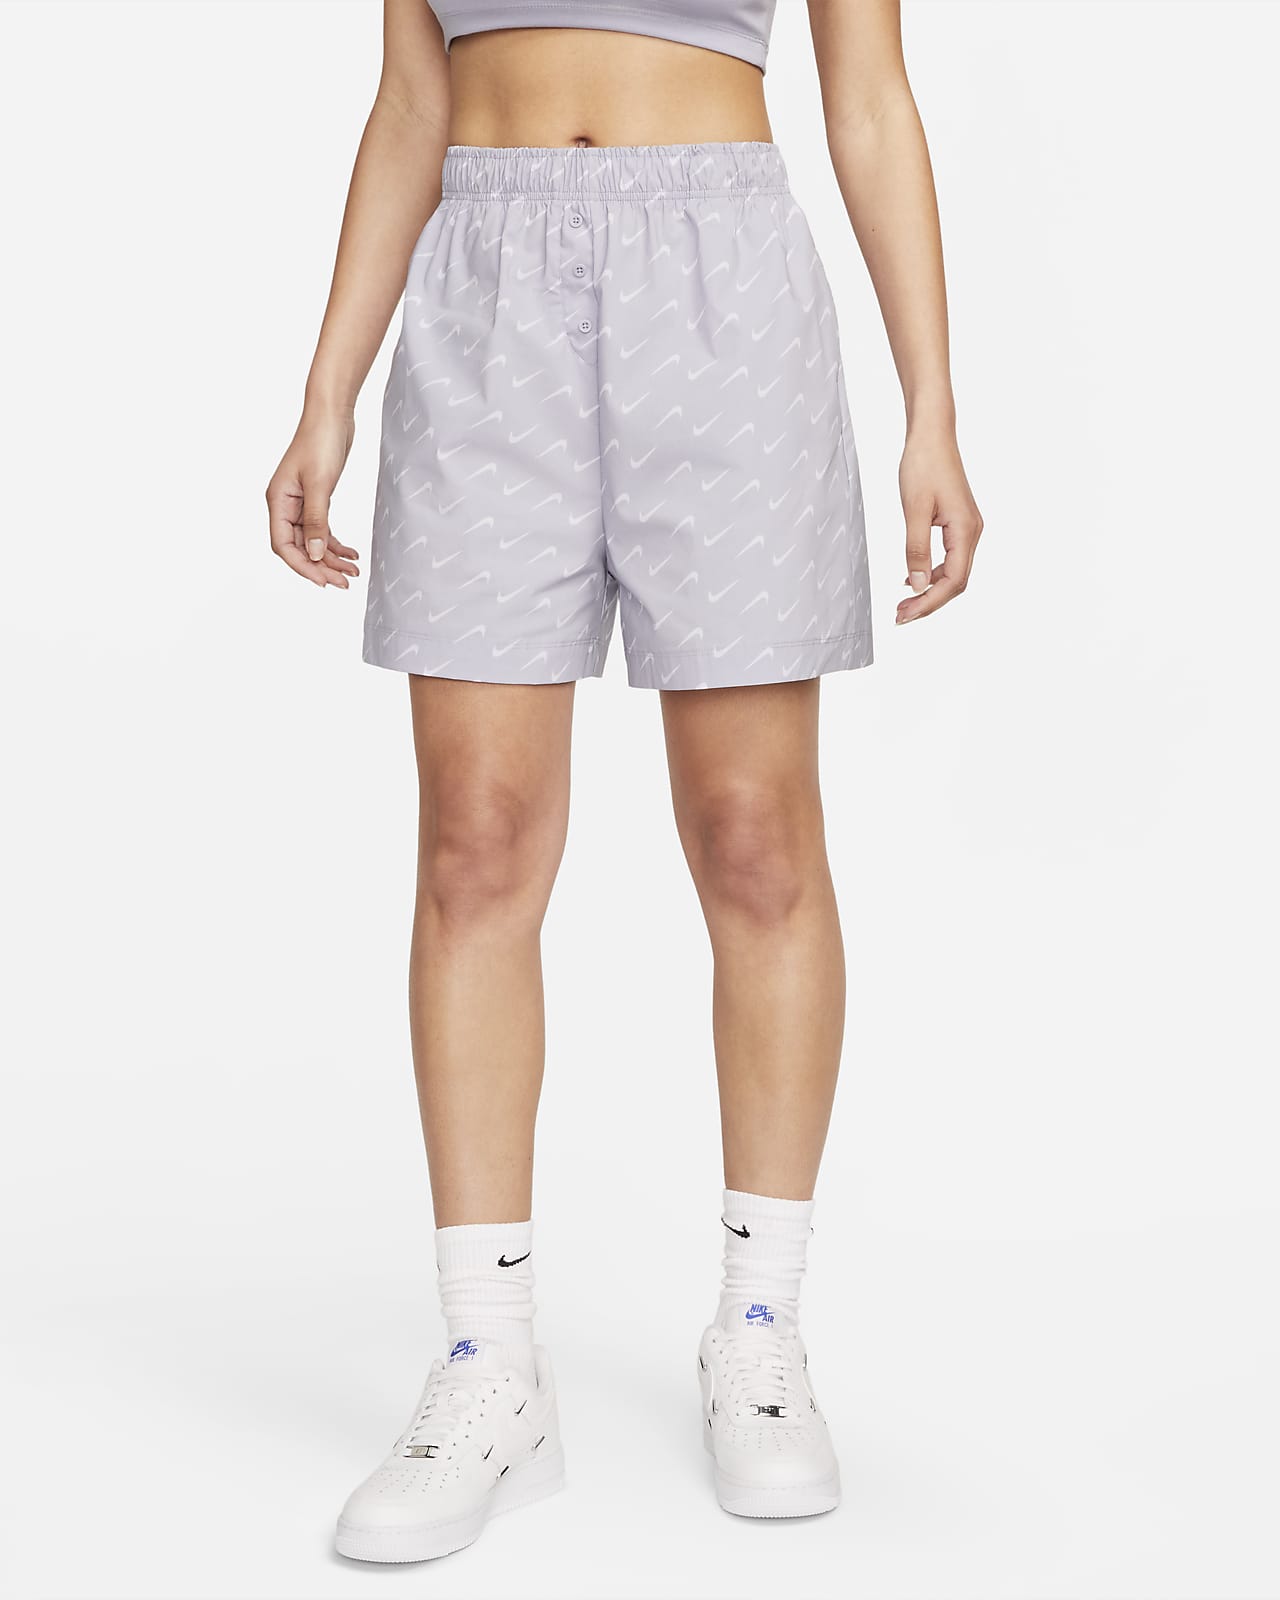 Shorts de tejido Woven de tiro alto para mujer Nike Sportswear Everyday Modern